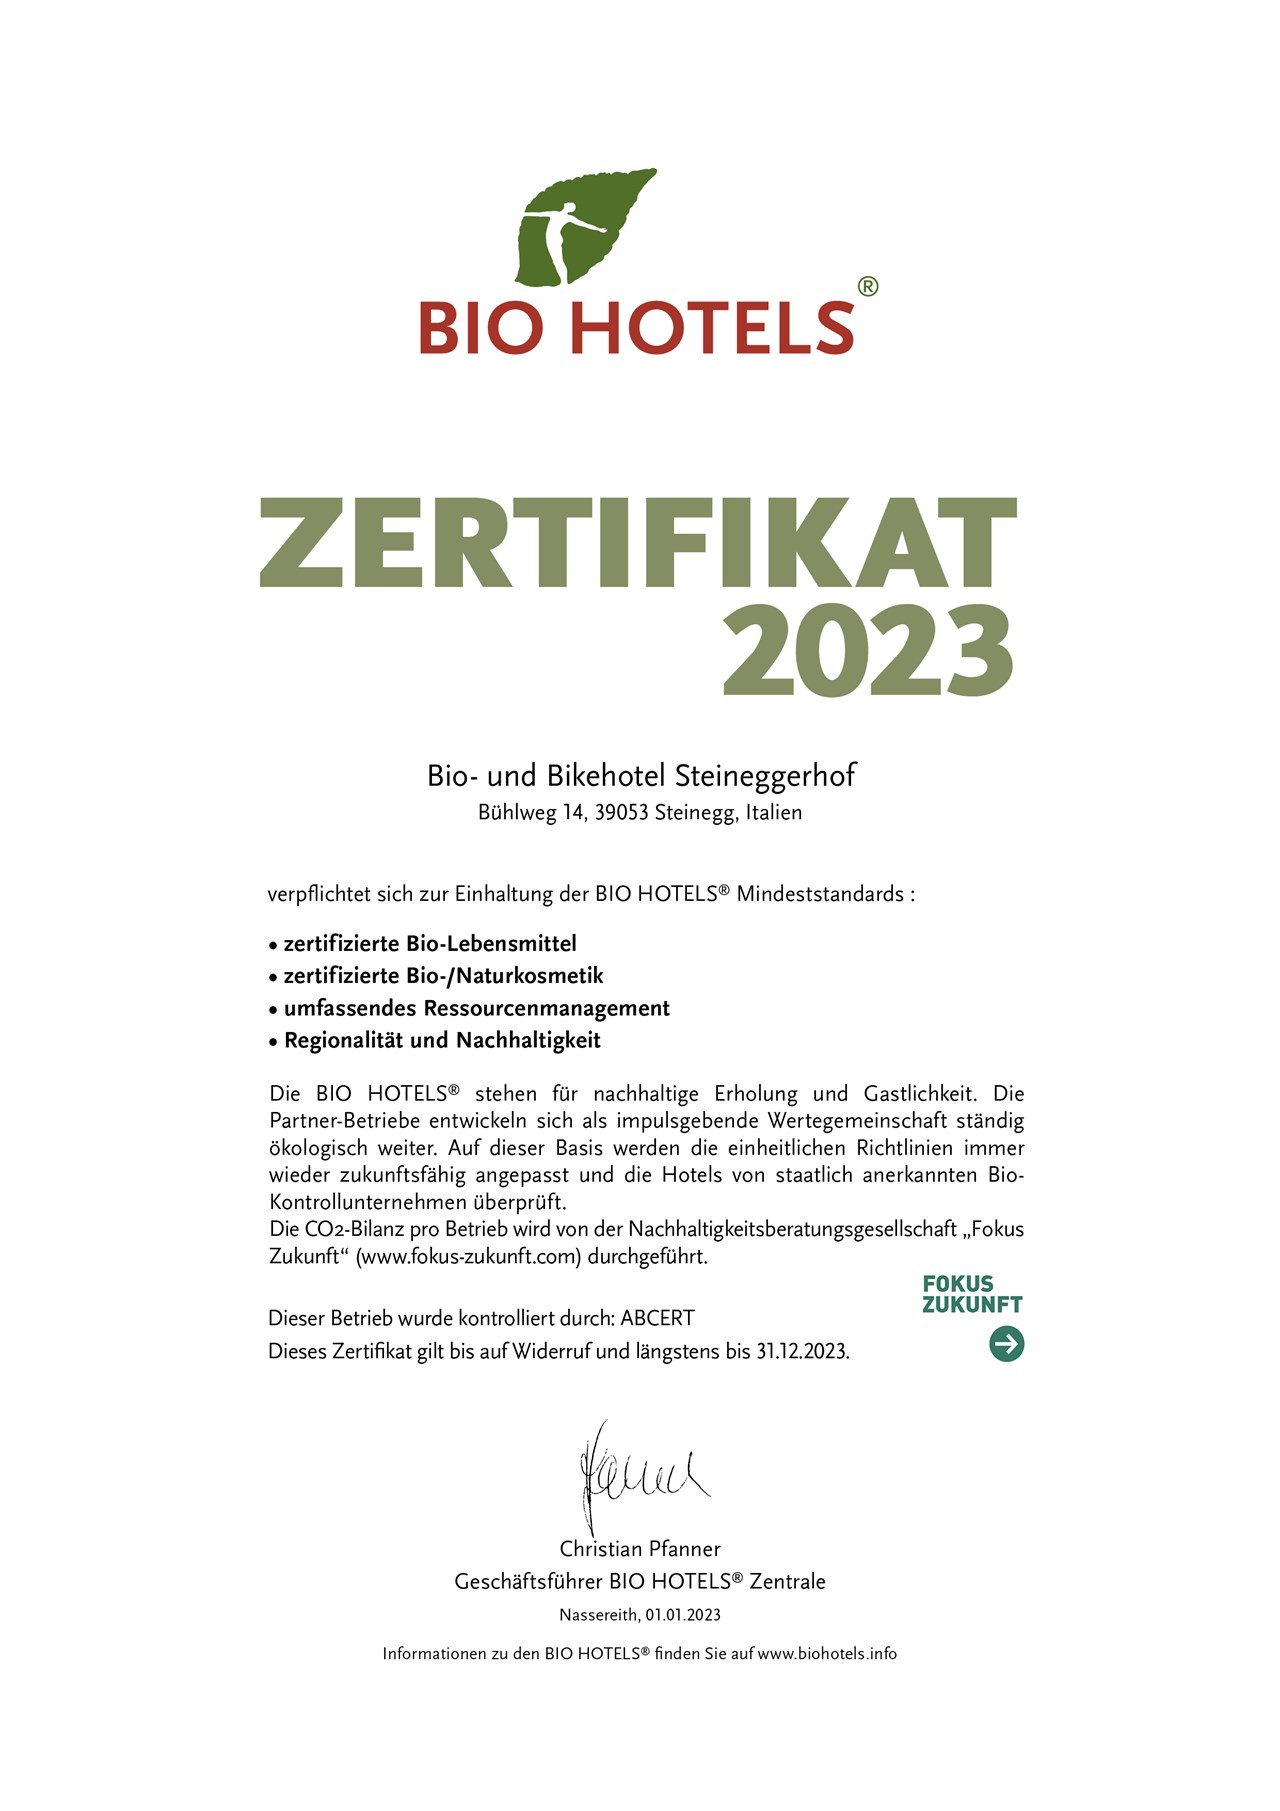 Bio & Bikehotel Steineggerhof Evidence certificates BIO HOTELS® certificate